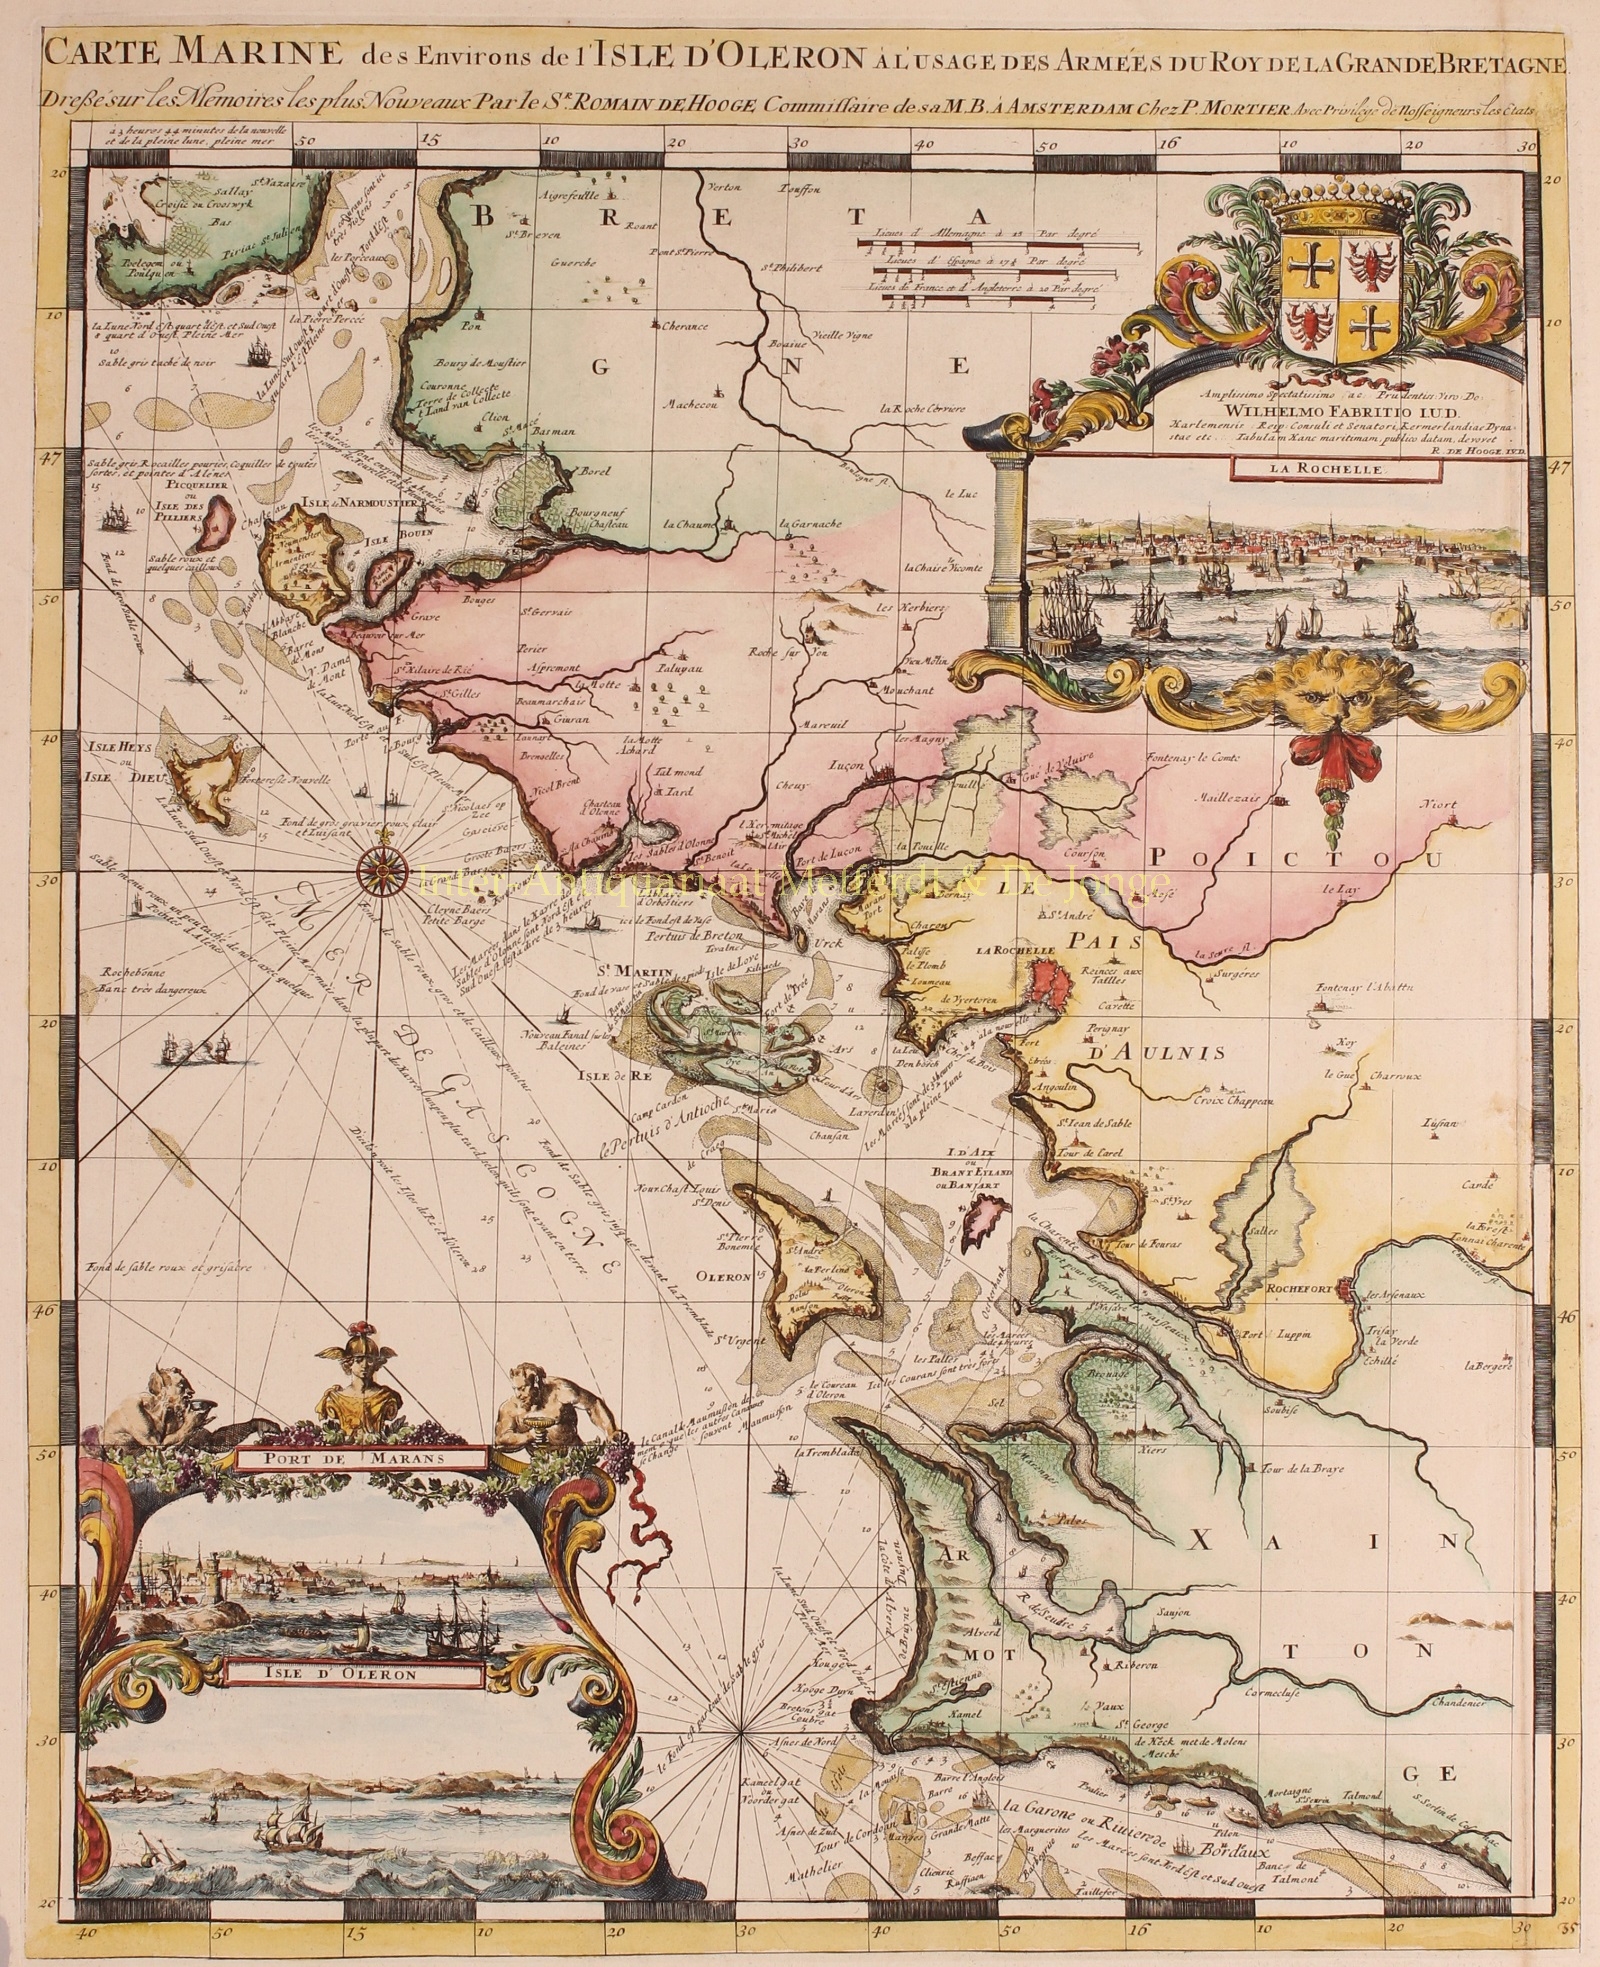  - France, Charente-Maritime - Romeijn de Hooghe +  Pieter Mortier, 1693